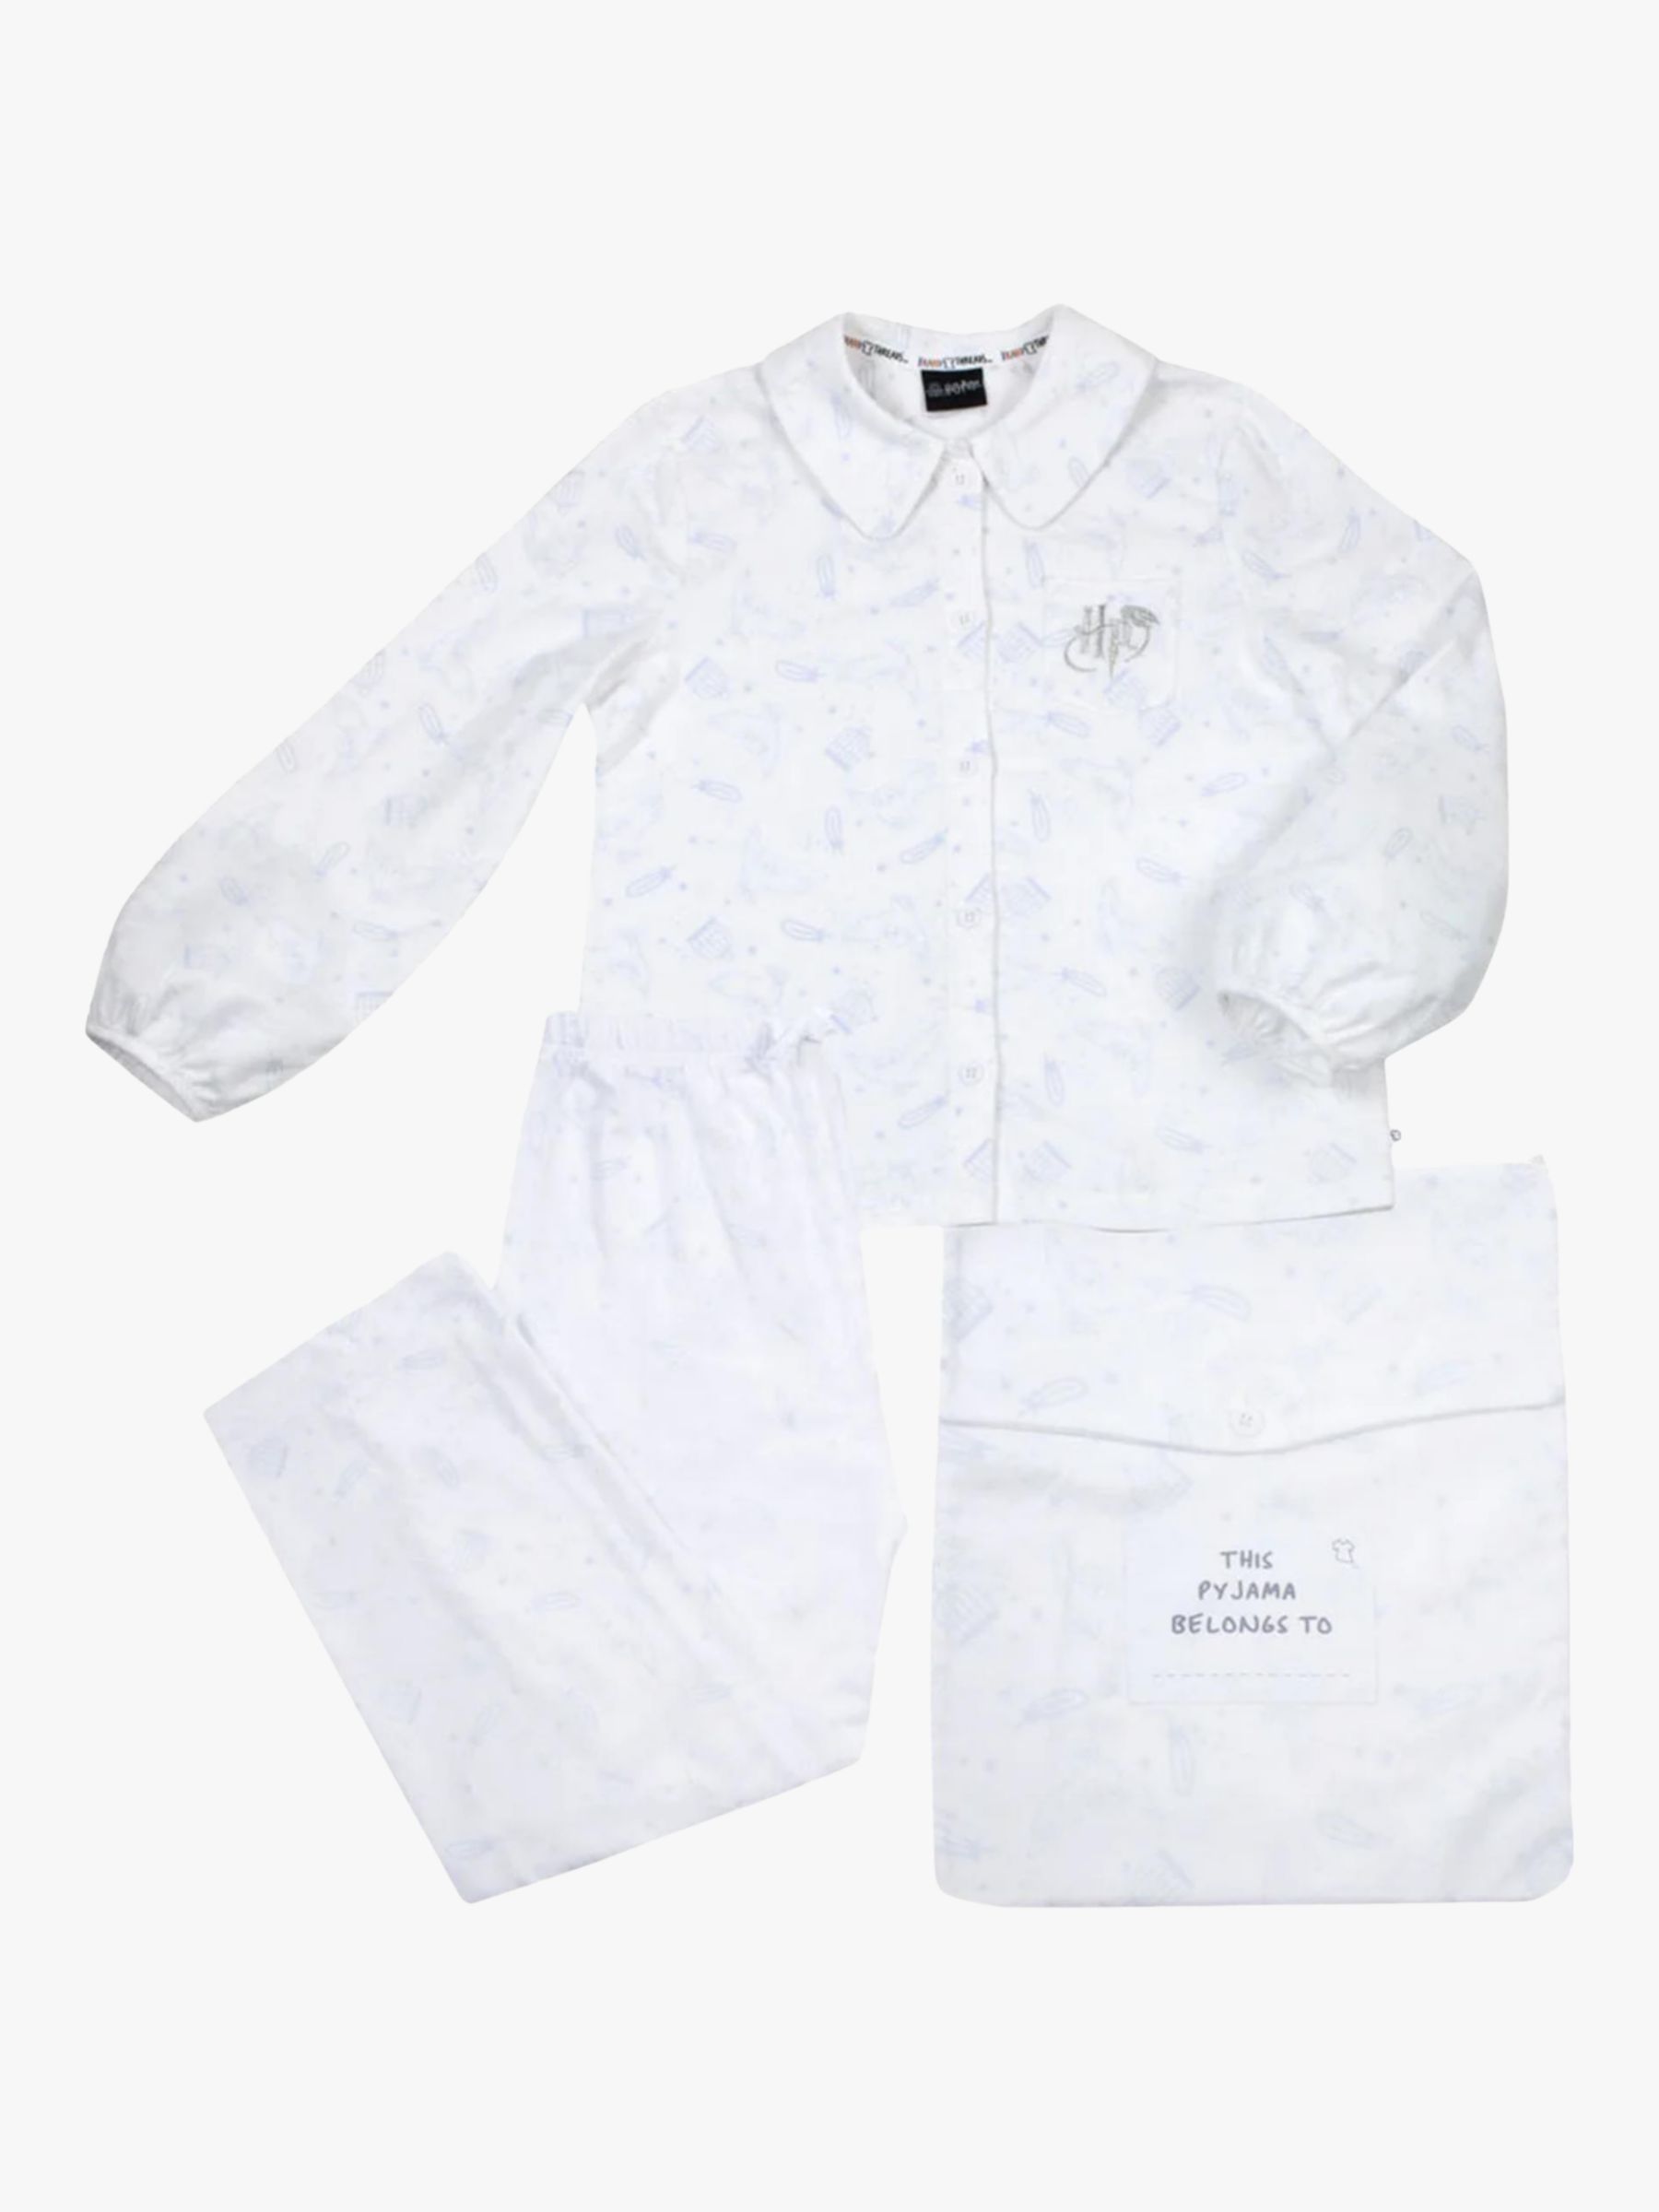 Brand Threads Kids' Harry Potter Pyjamas and Pyjama Bag, White, 9-10 years